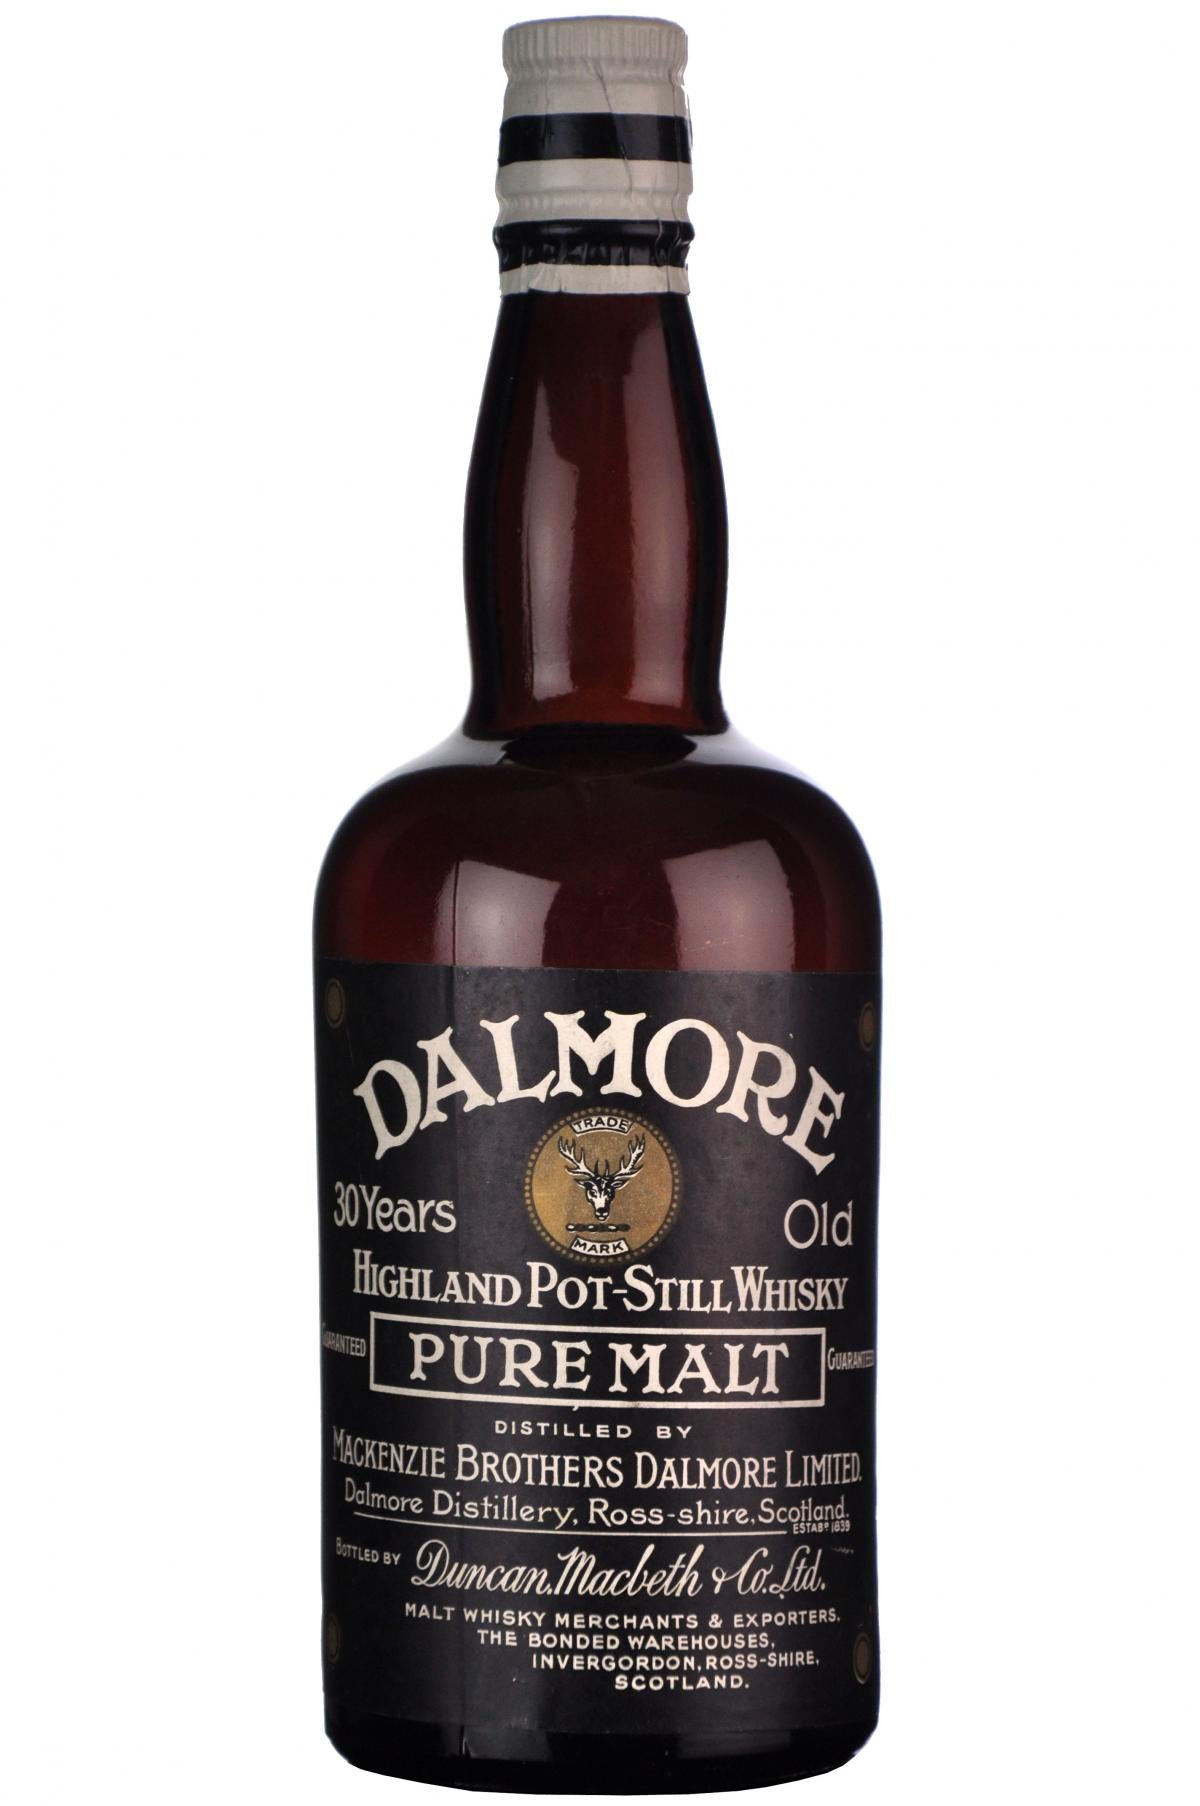 dalmore 30 year old bottled by duncan macbeth co. ltd, highland single malt scotch whisky whiskey